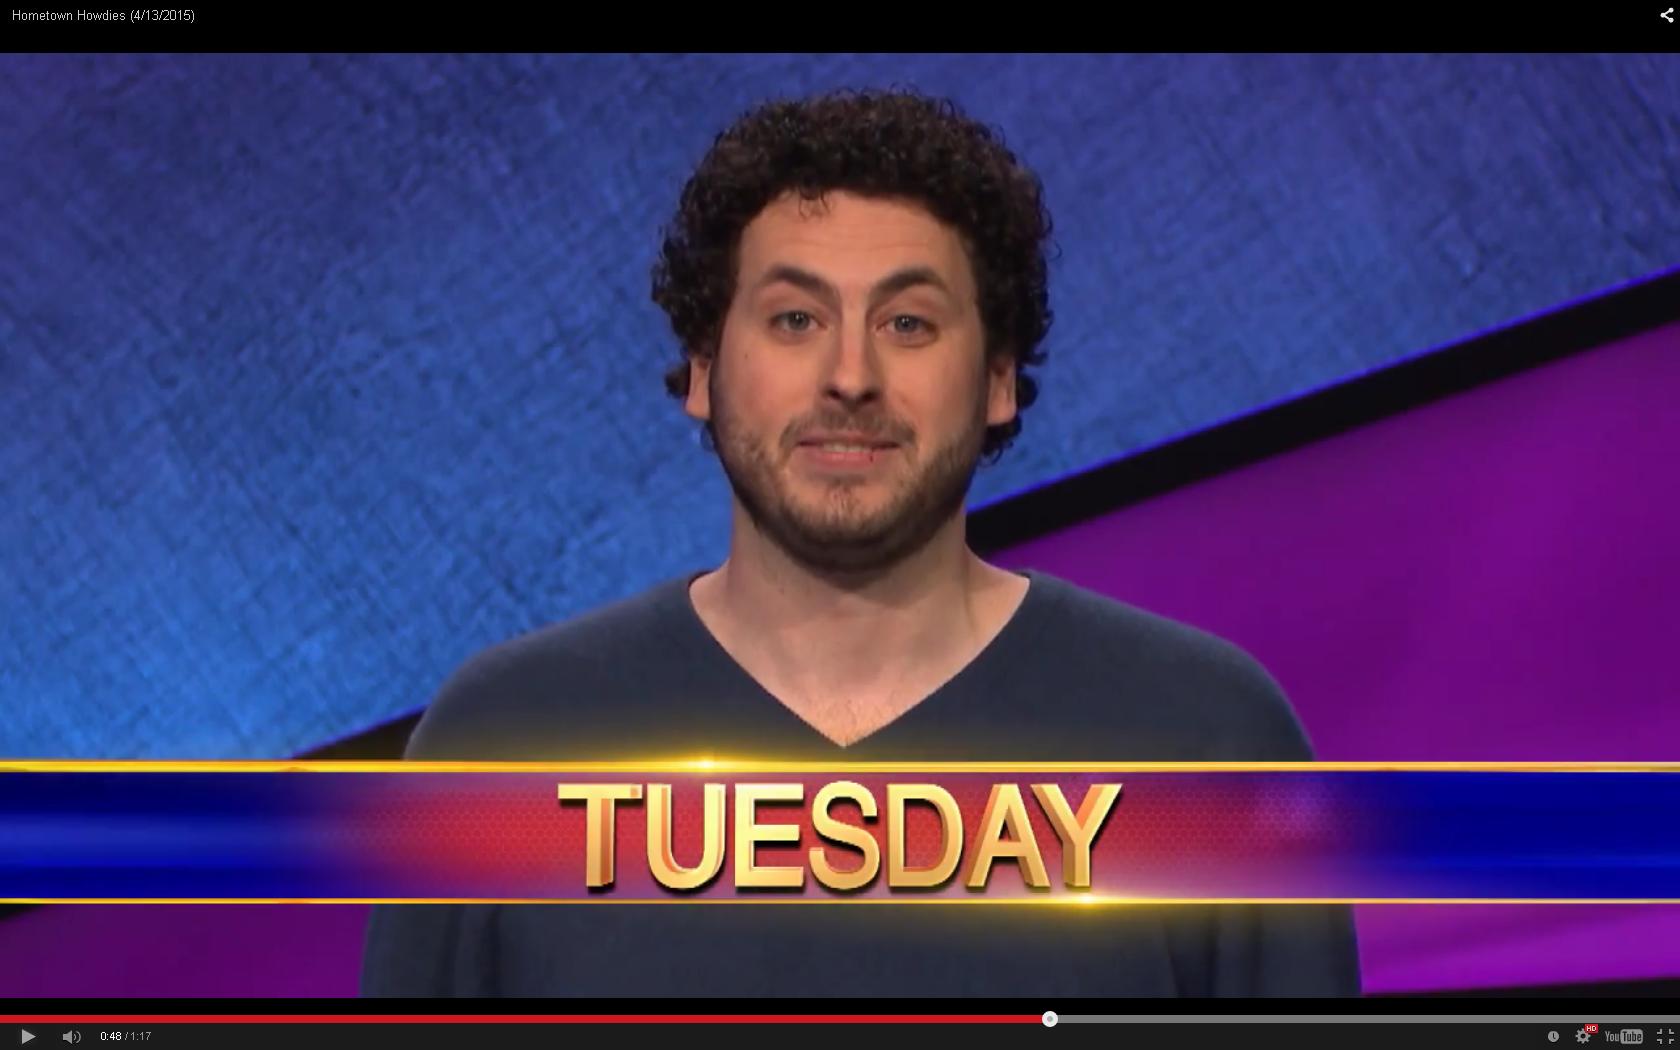 El jugador de póker Alex Jacob triunfa en el concurso de TV «Jeopardy»